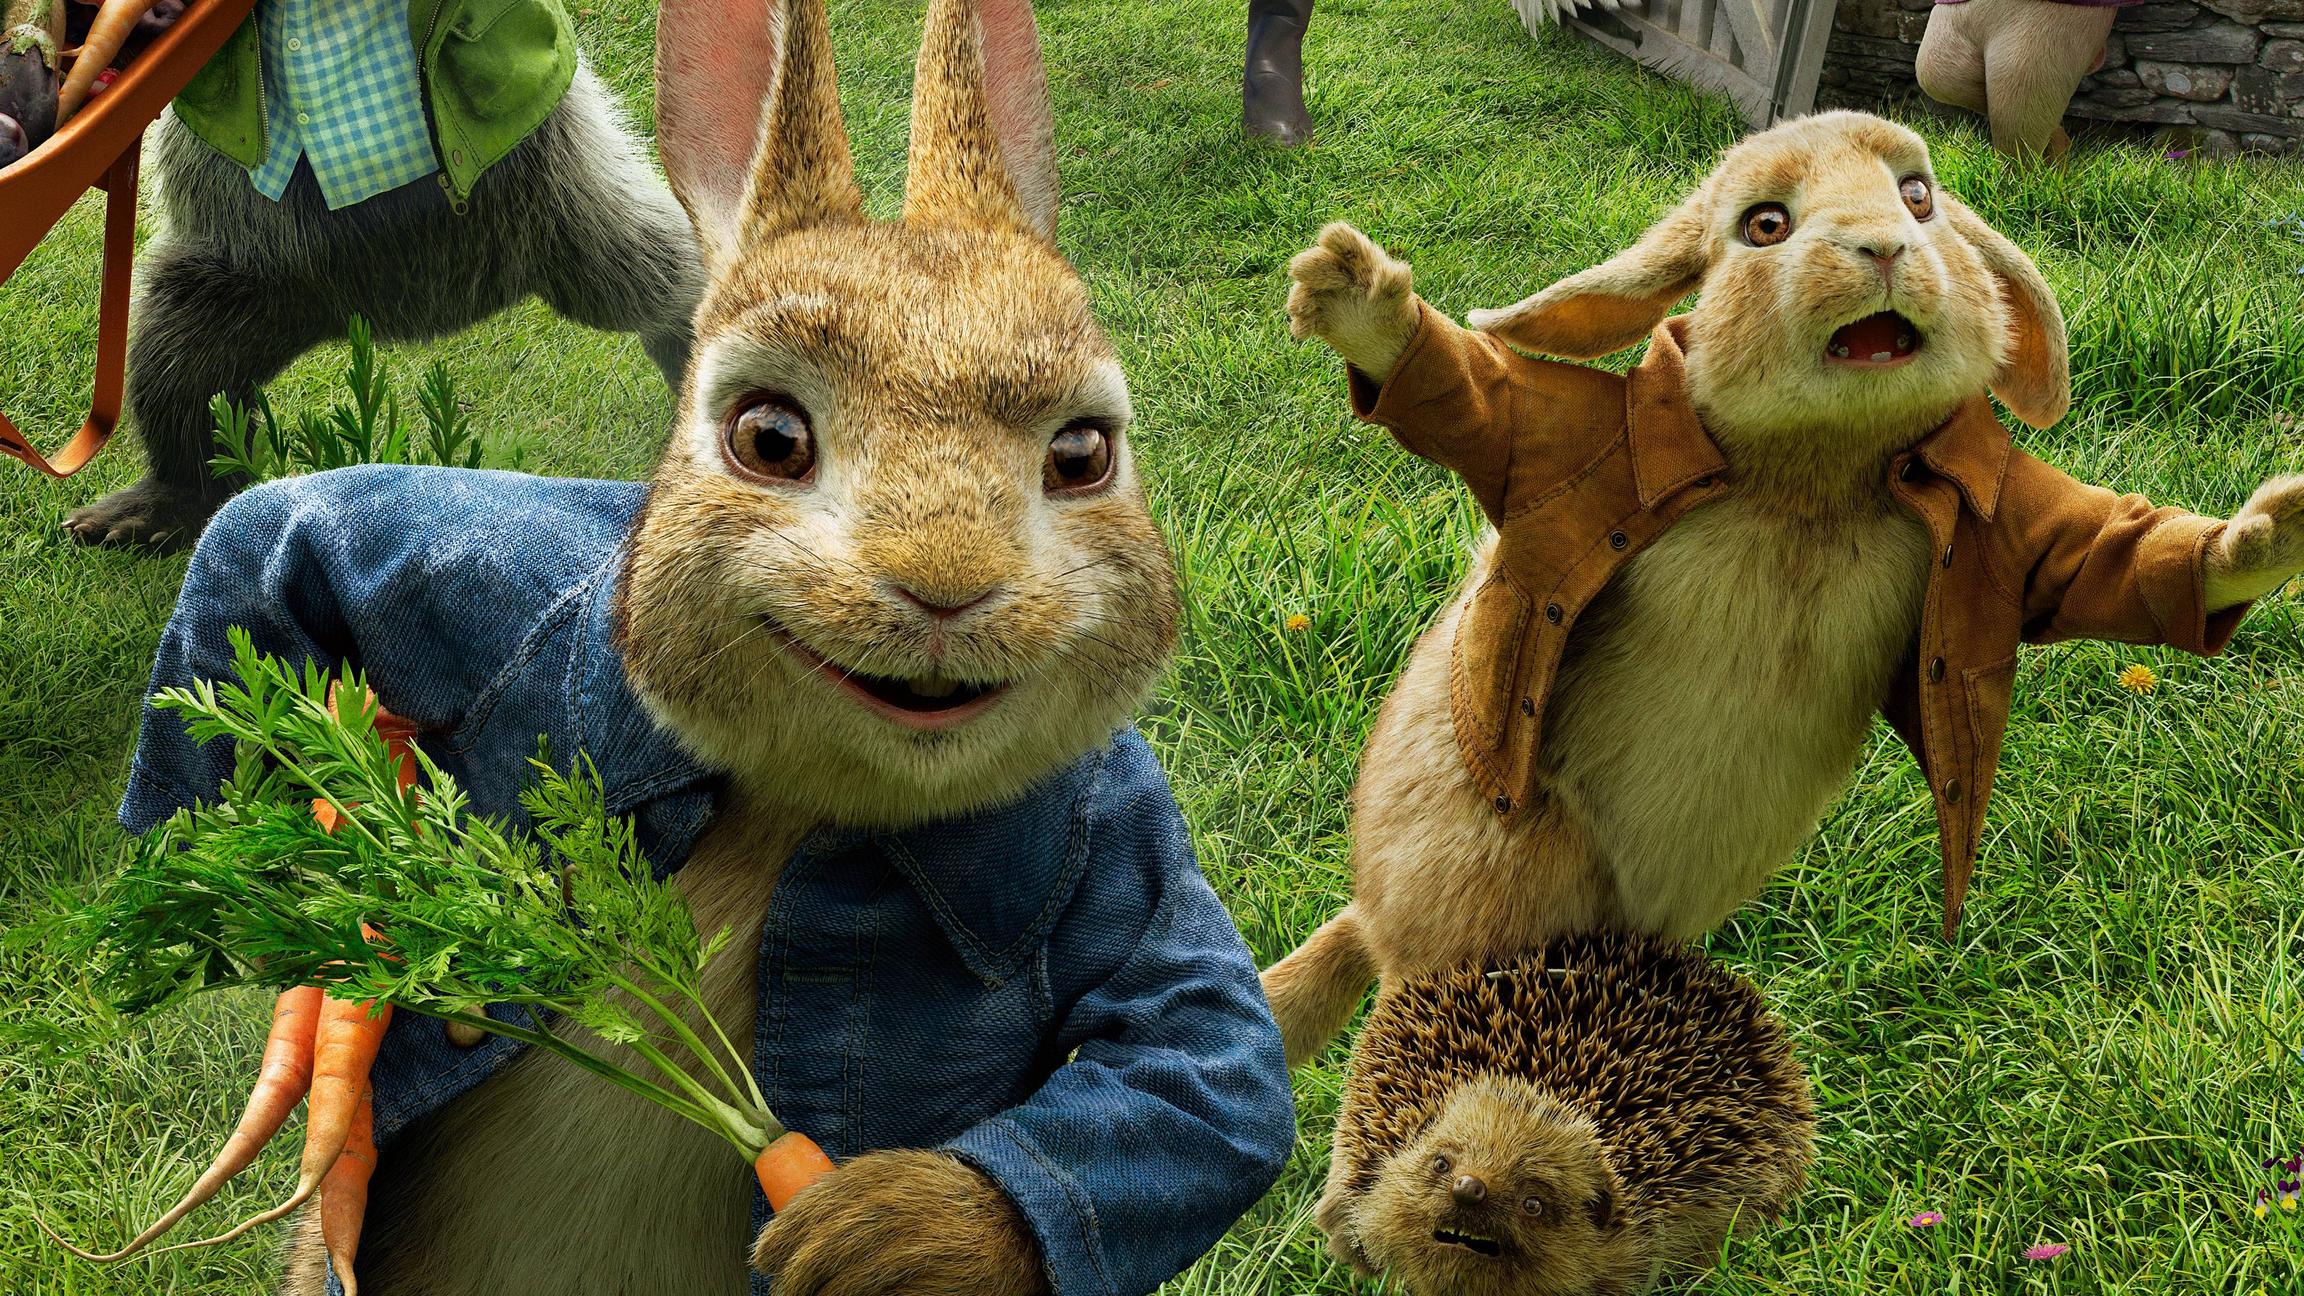 Peter Rabbit 2018 Movie Poster Wallpapers